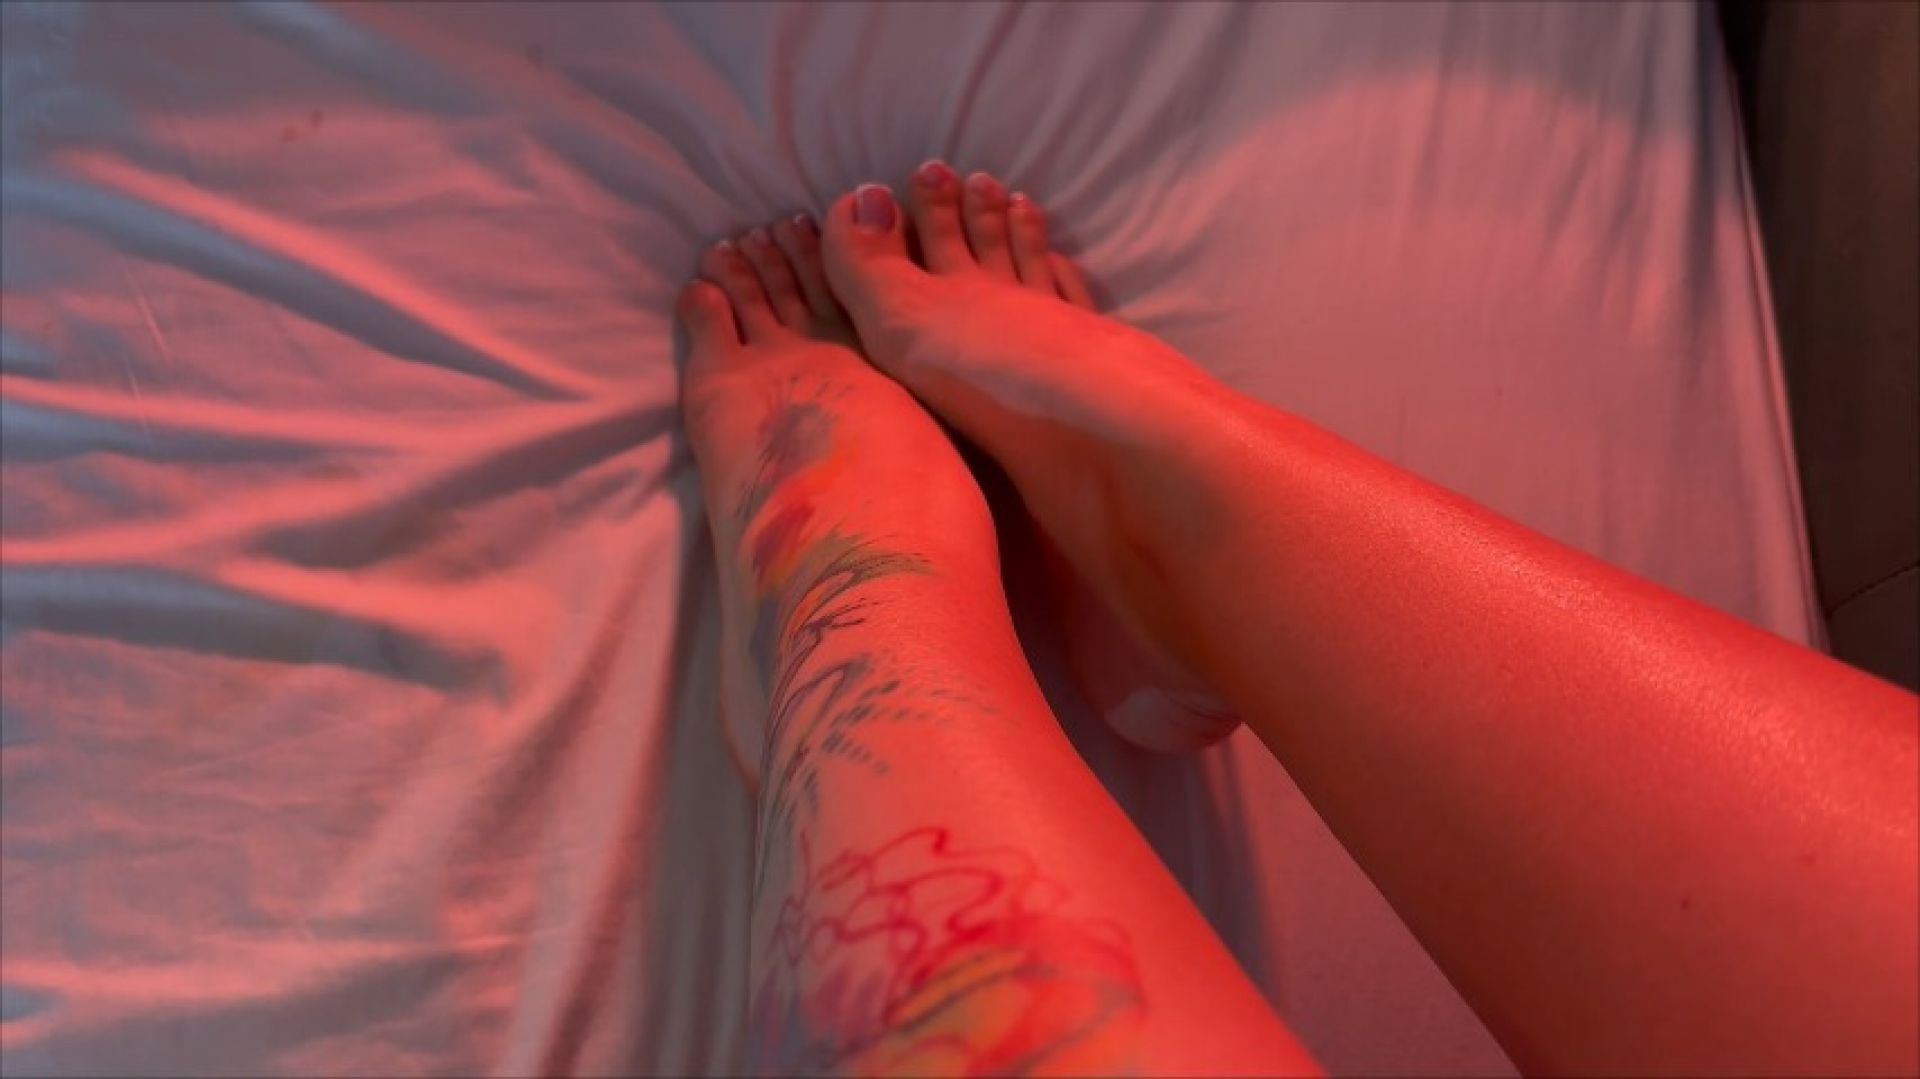 leaked Foot massage thumbnail